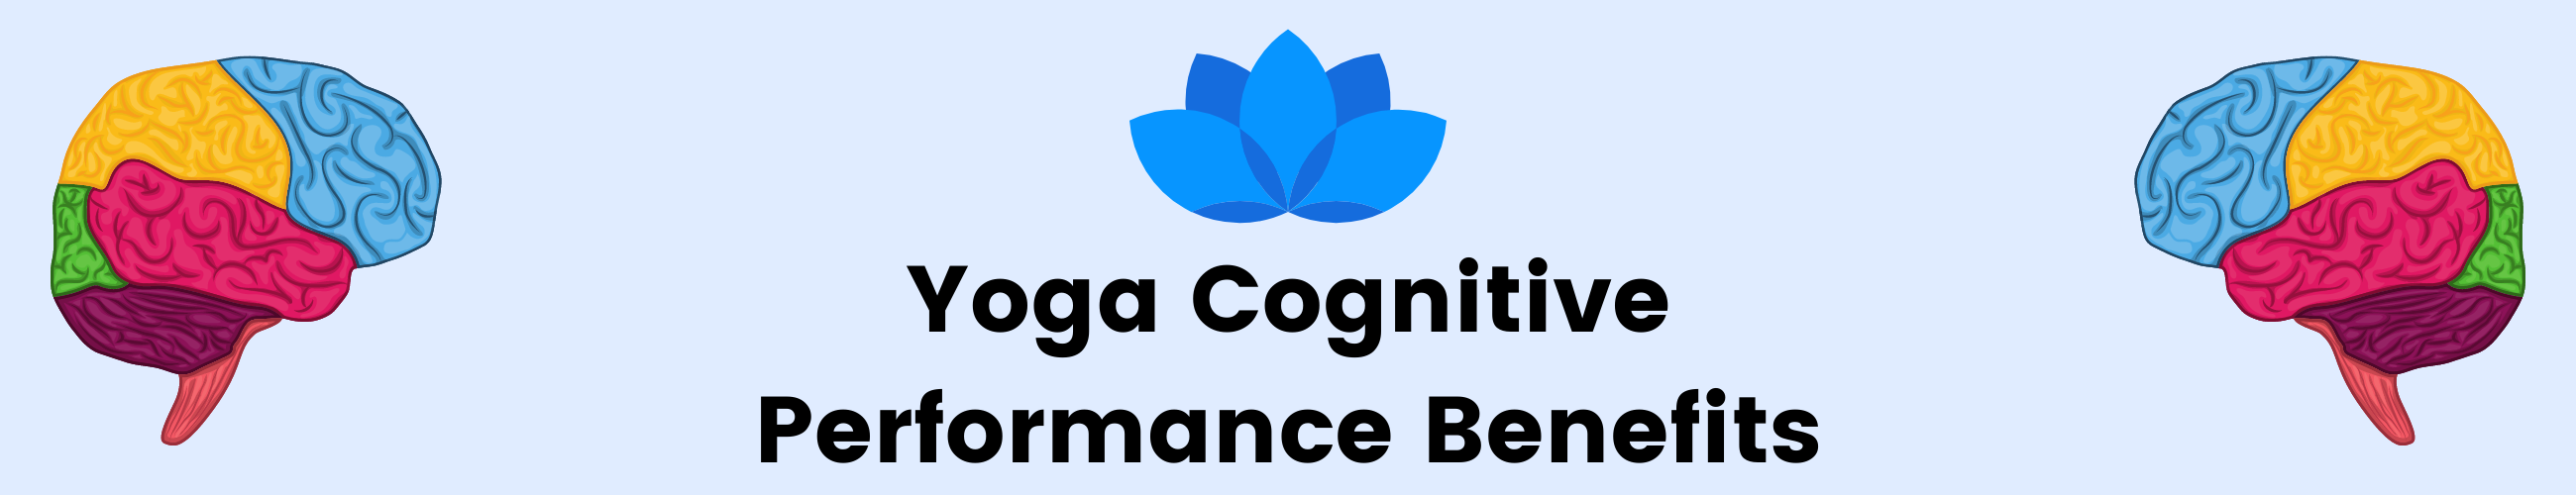 Yoga Cognitive Performance Benefits